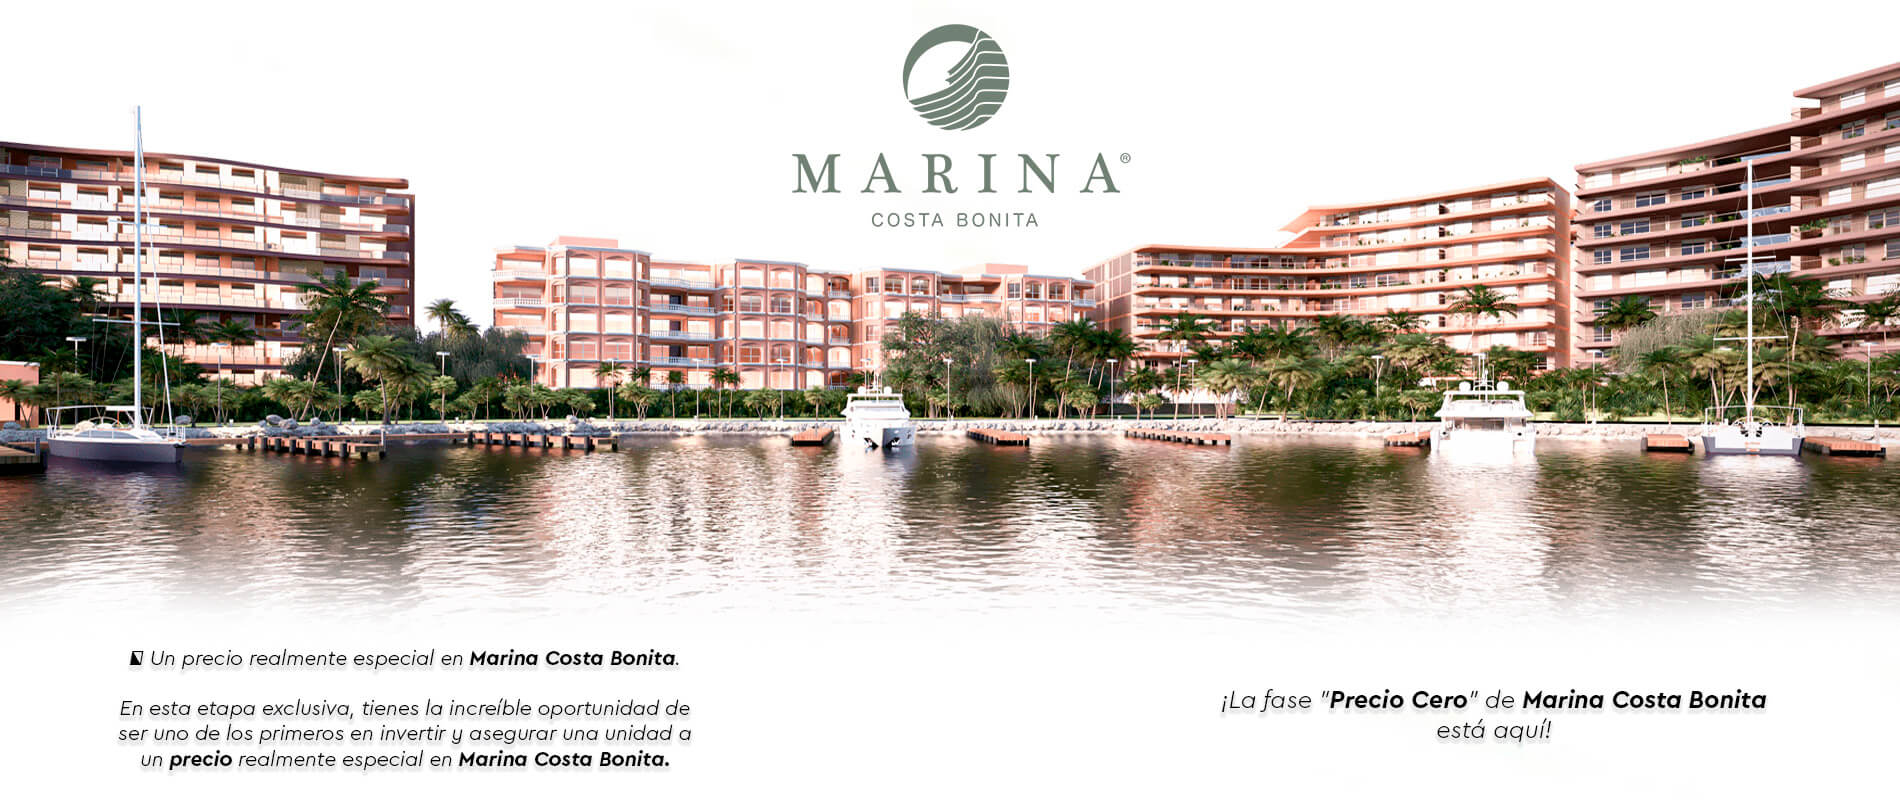 Marina Costa Bonita | Zero Price